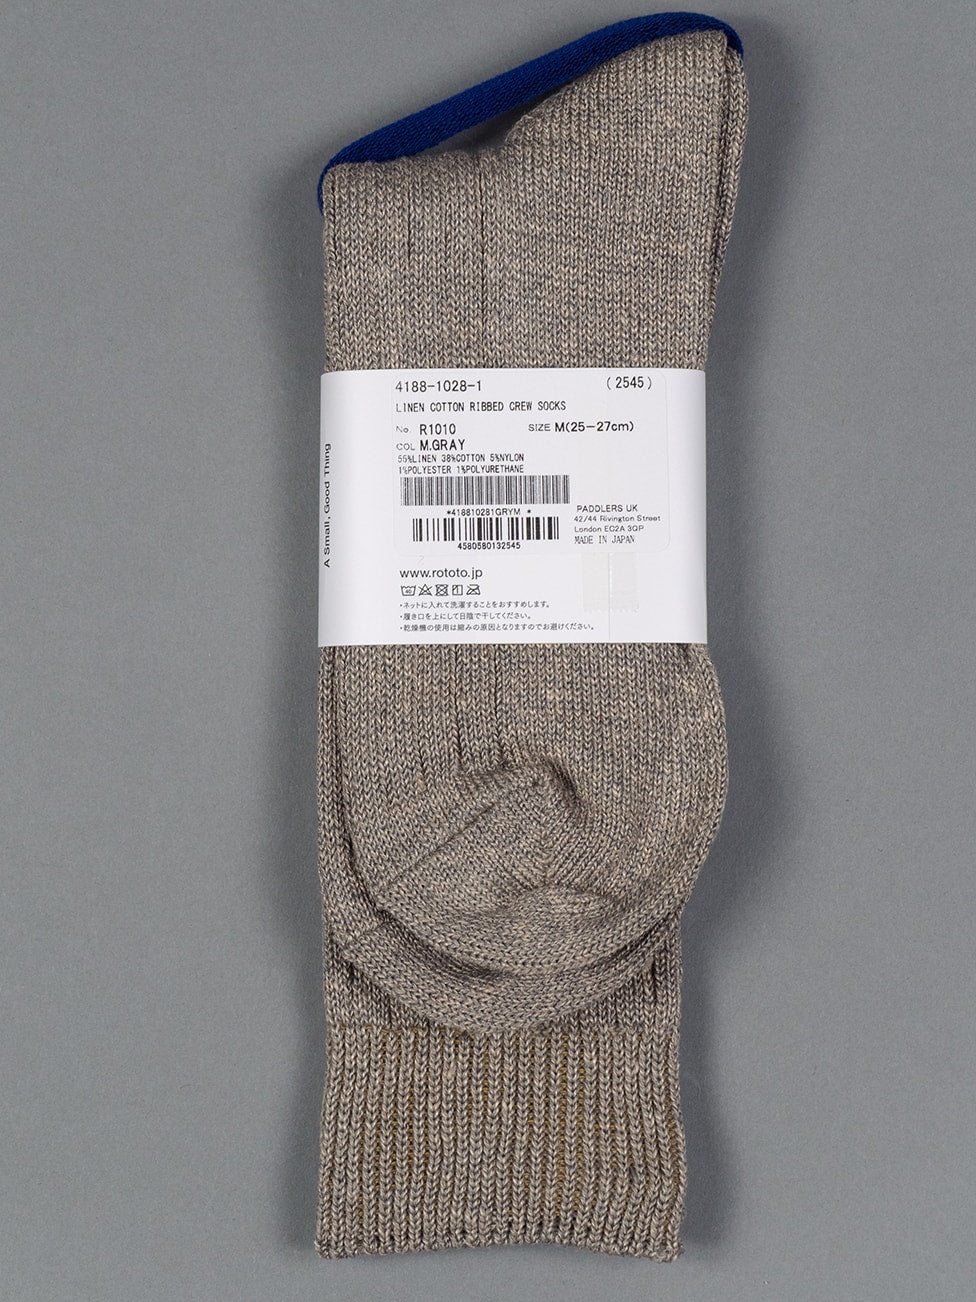 rototo linen cotton ribbed crew socks medium gray back label